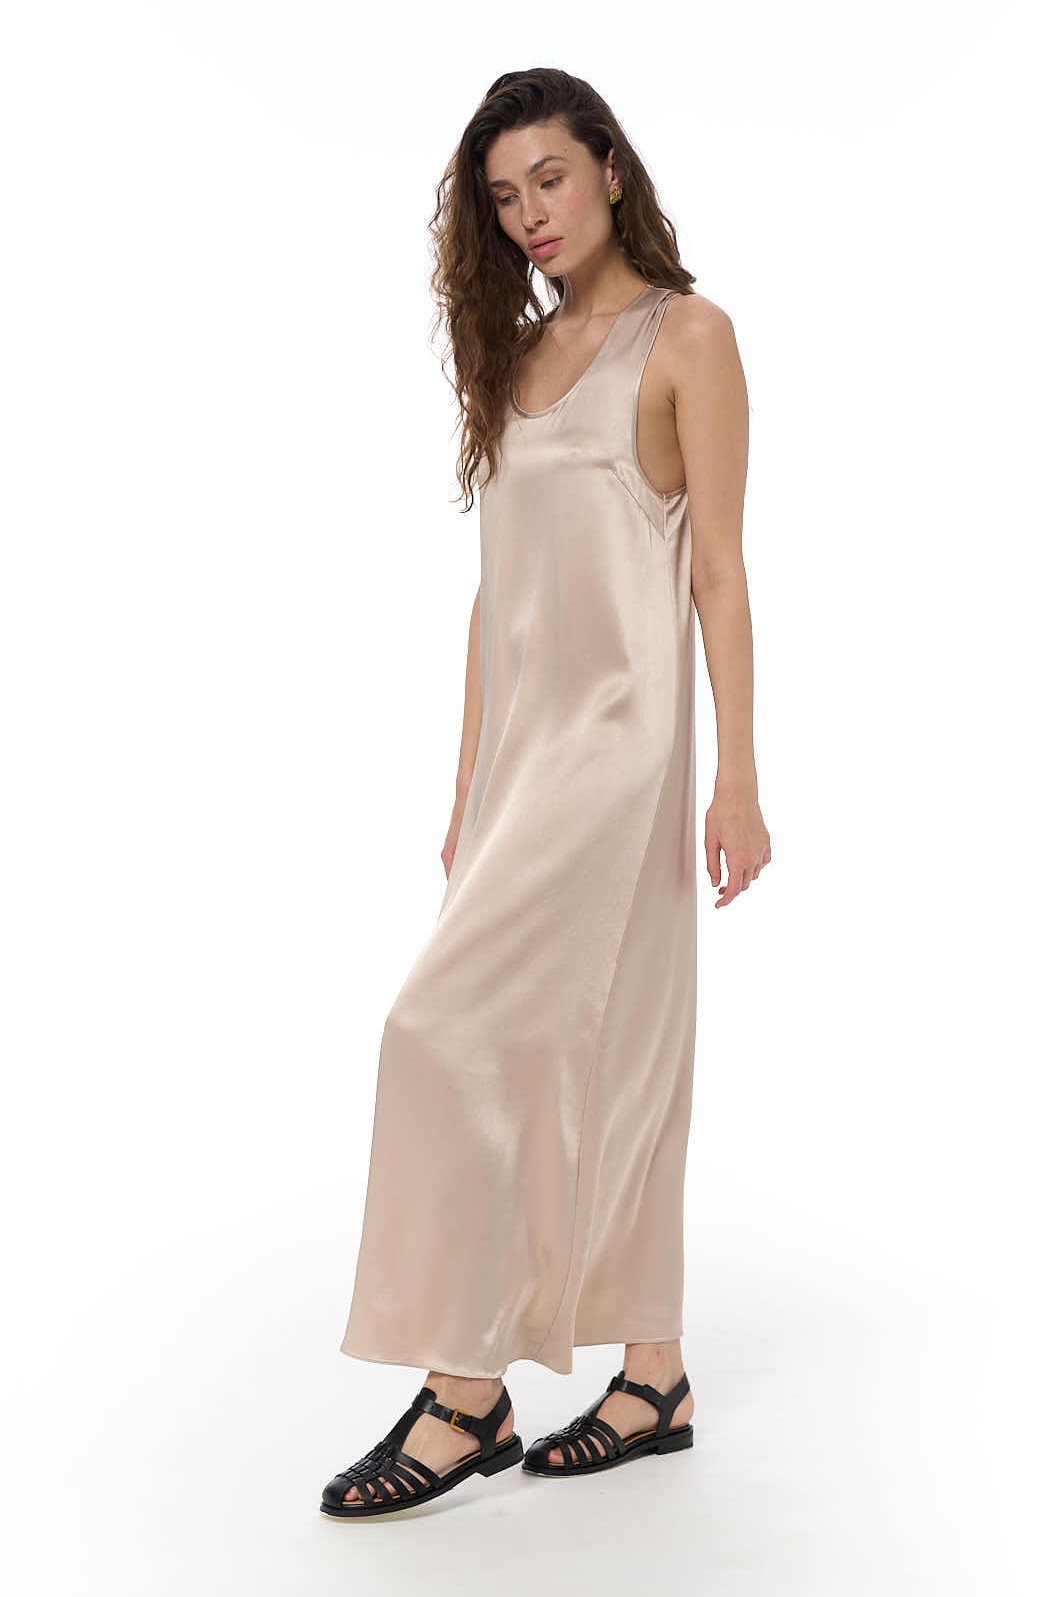 Платье-майка 2.0 из вискозного шелка, золотистый беж